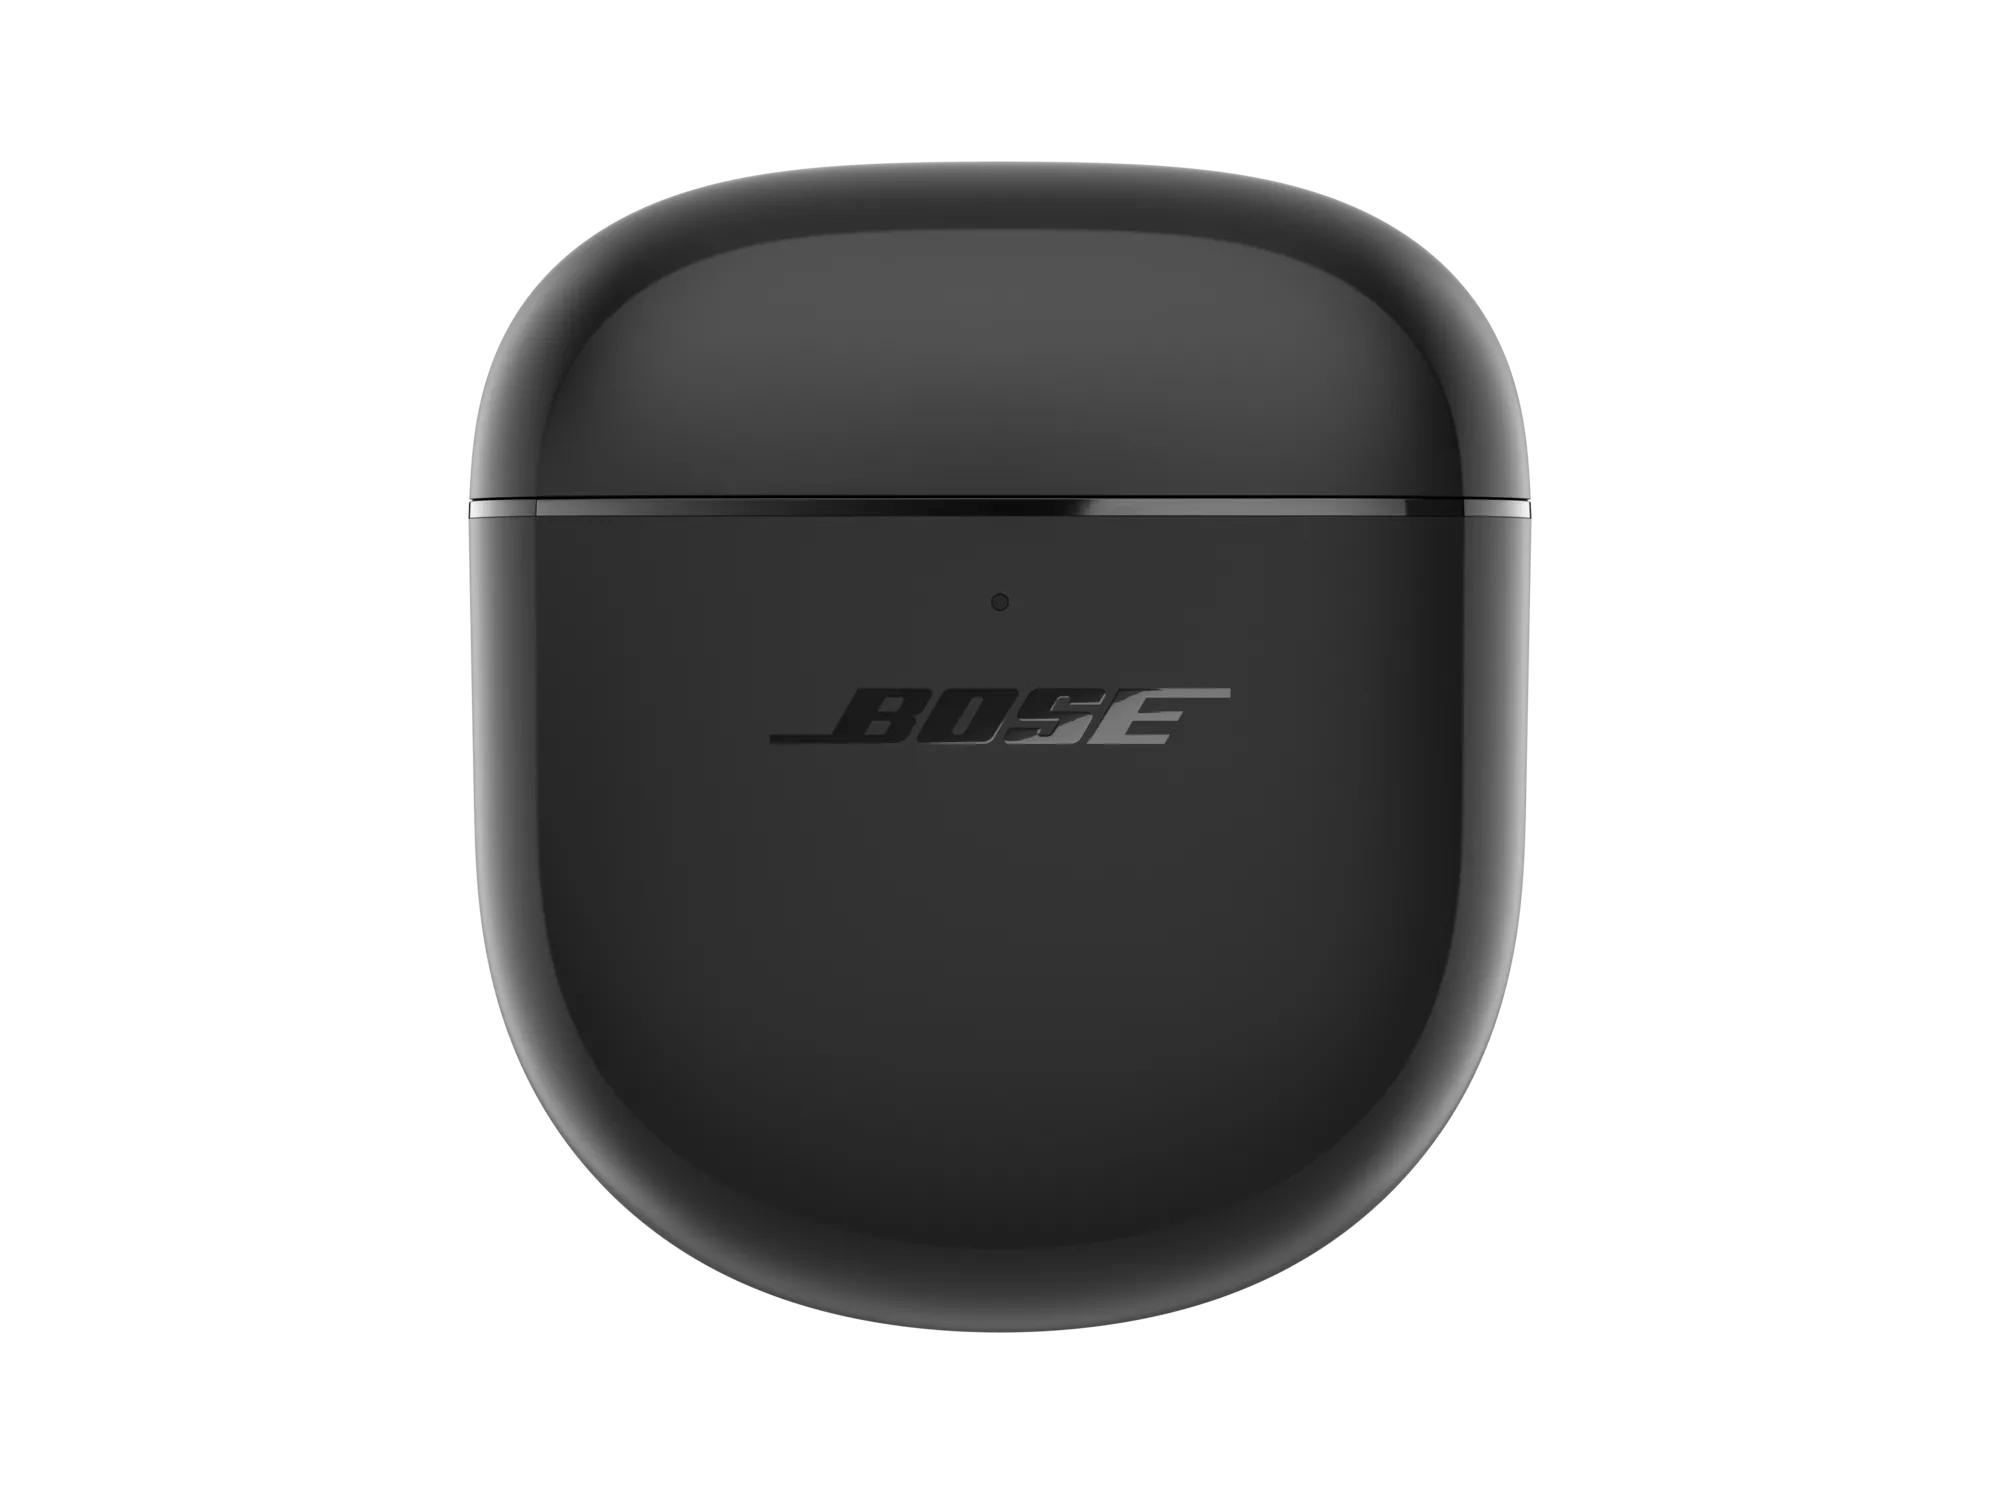 Bose QuietComfort Earbuds II | Bose Support